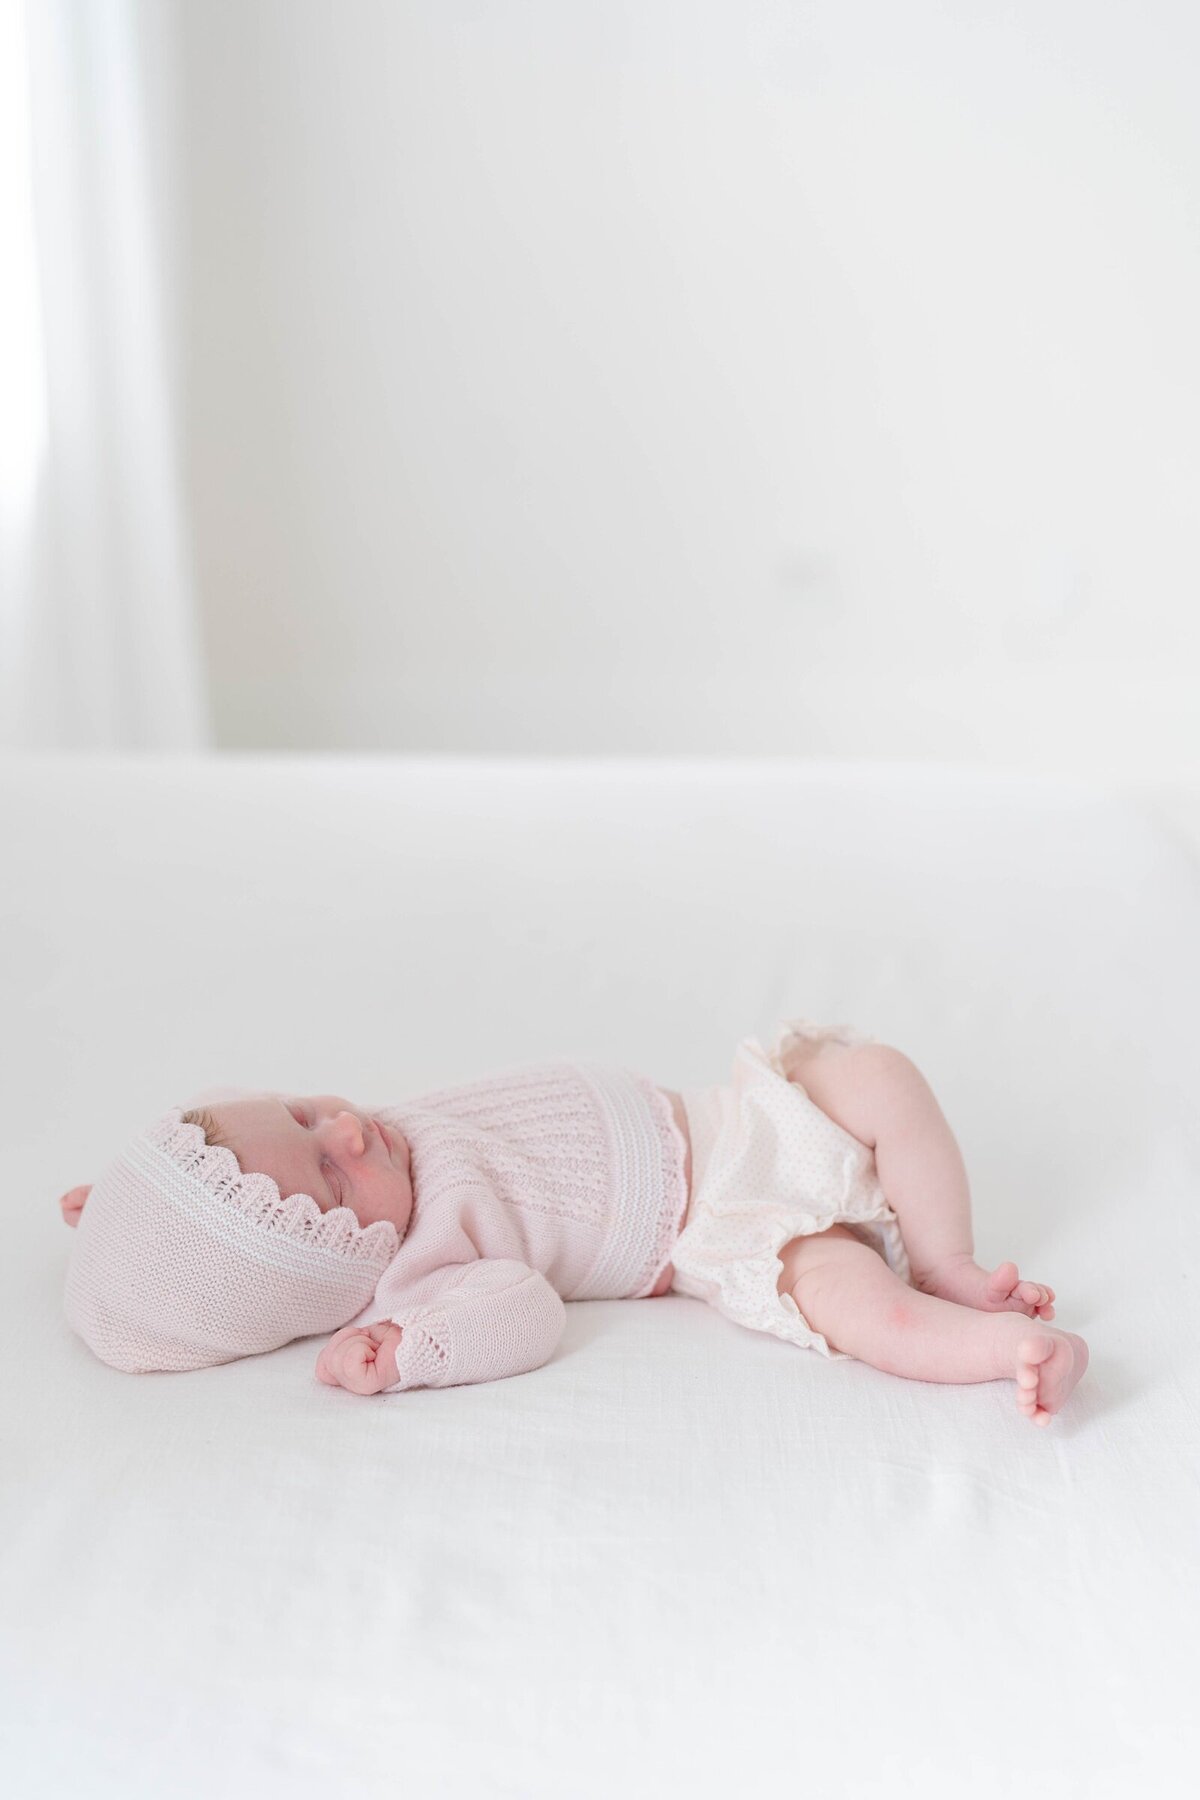 Roswell Newborn Photographer_0066